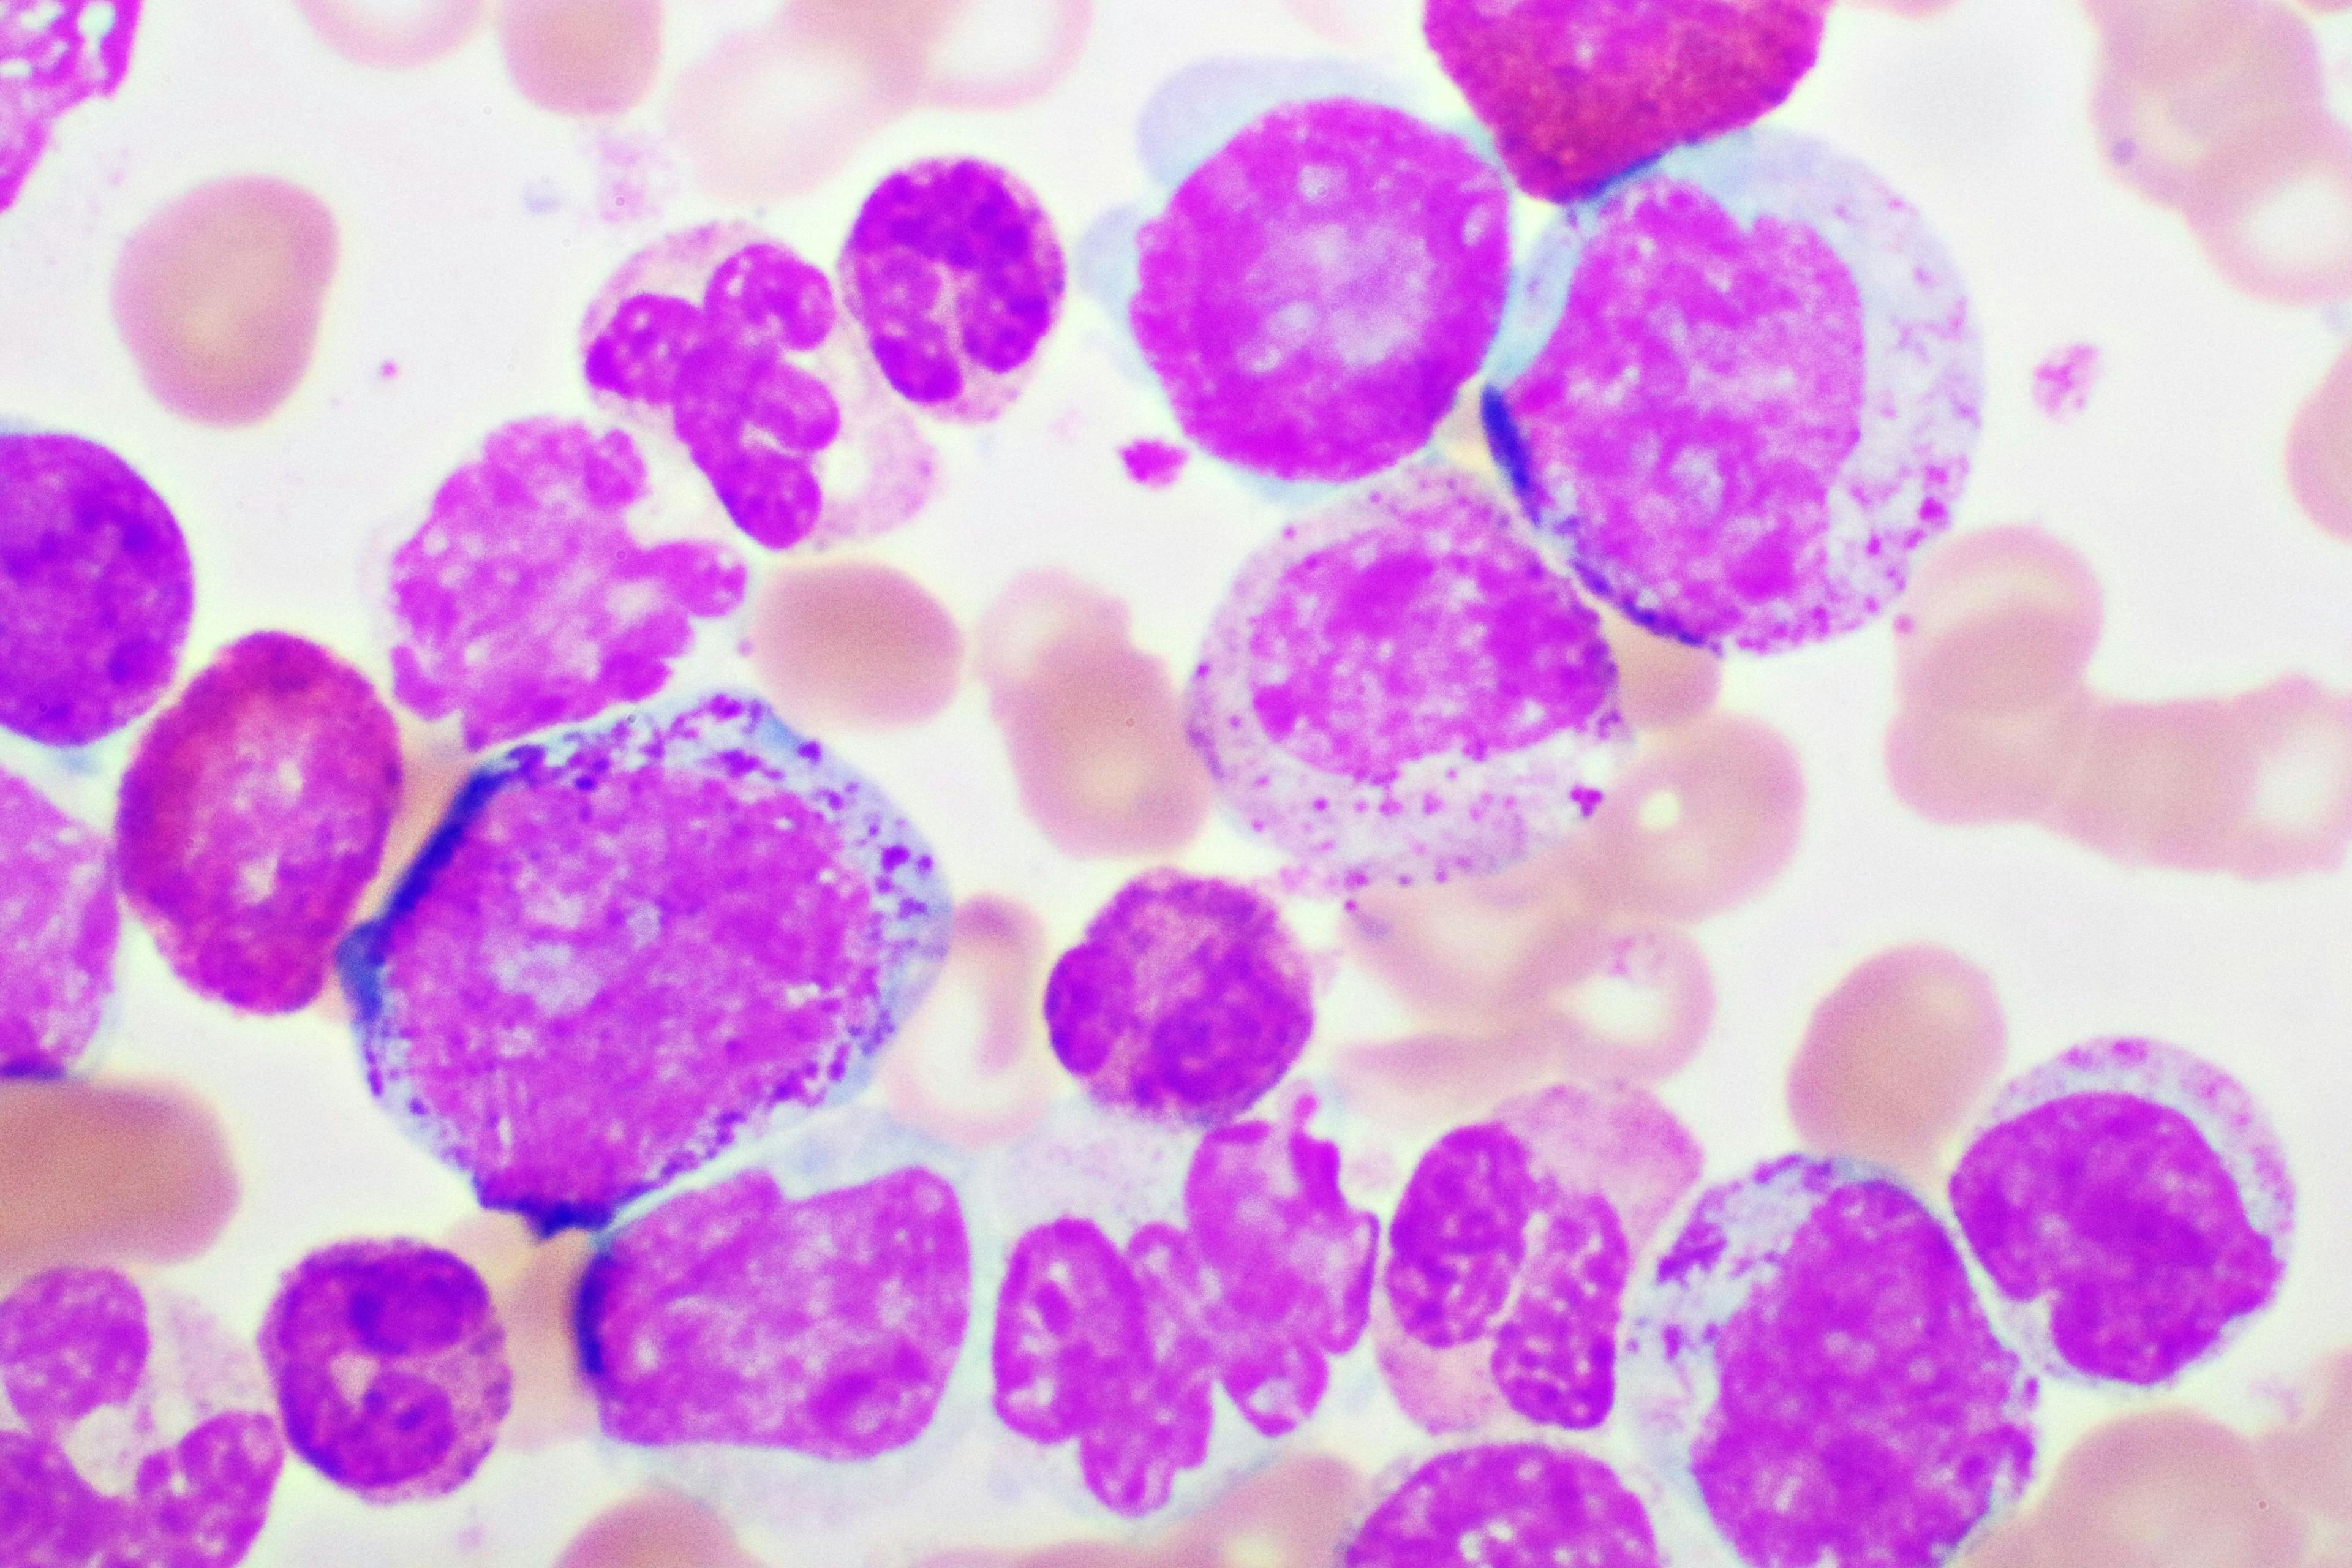 Chronic myeloid leukemia -- Image credit: jarun011 | stock.adobe.com